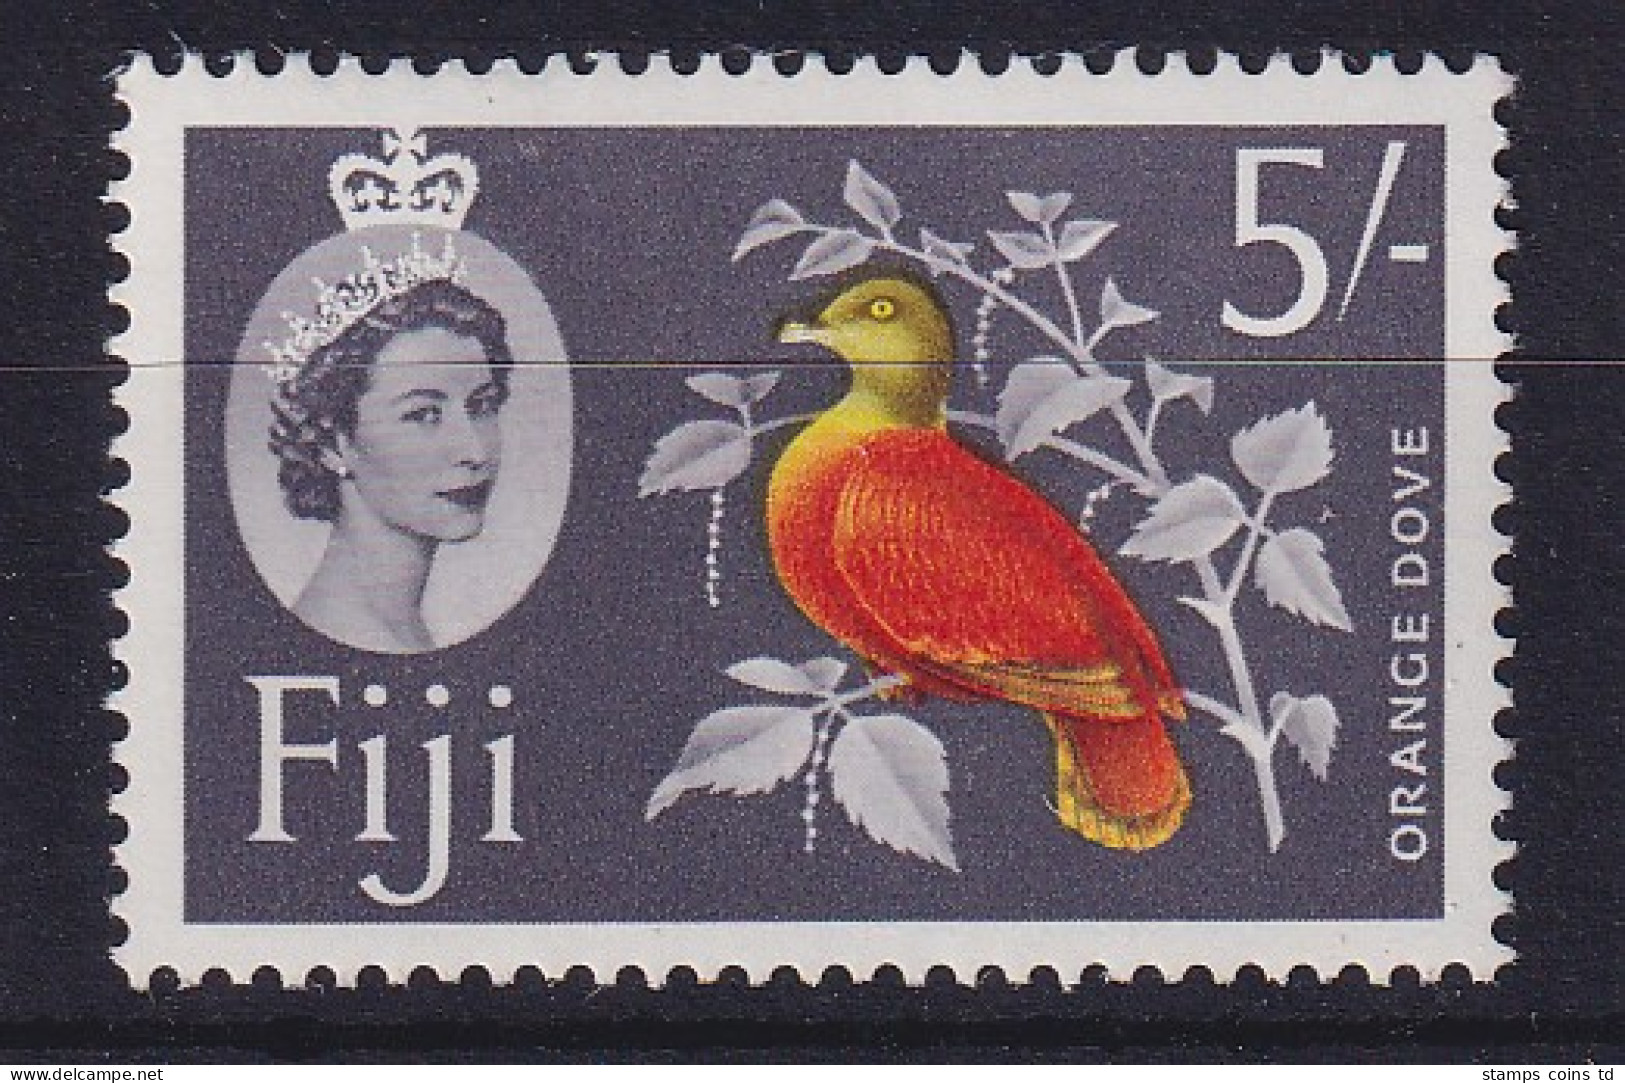 Fiji Islands Fidschi-Inseln 1962 Taube Mi.-Nr. 165 Postfrisch ** - Fiji (1970-...)